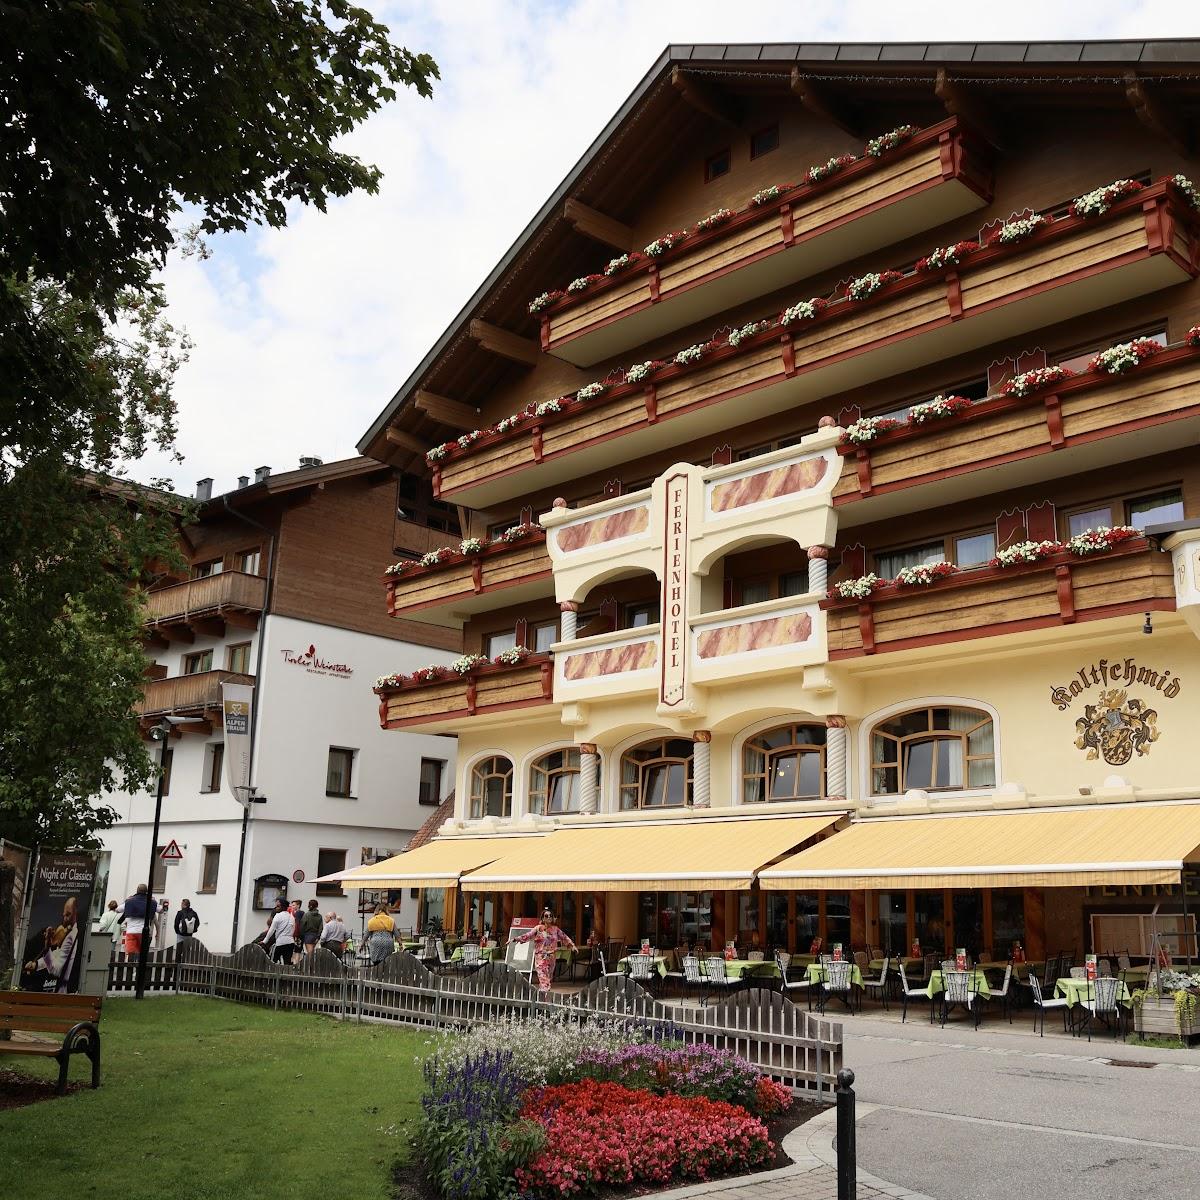 Restaurant "Ferienhotel Kaltschmid" in Seefeld in Tirol